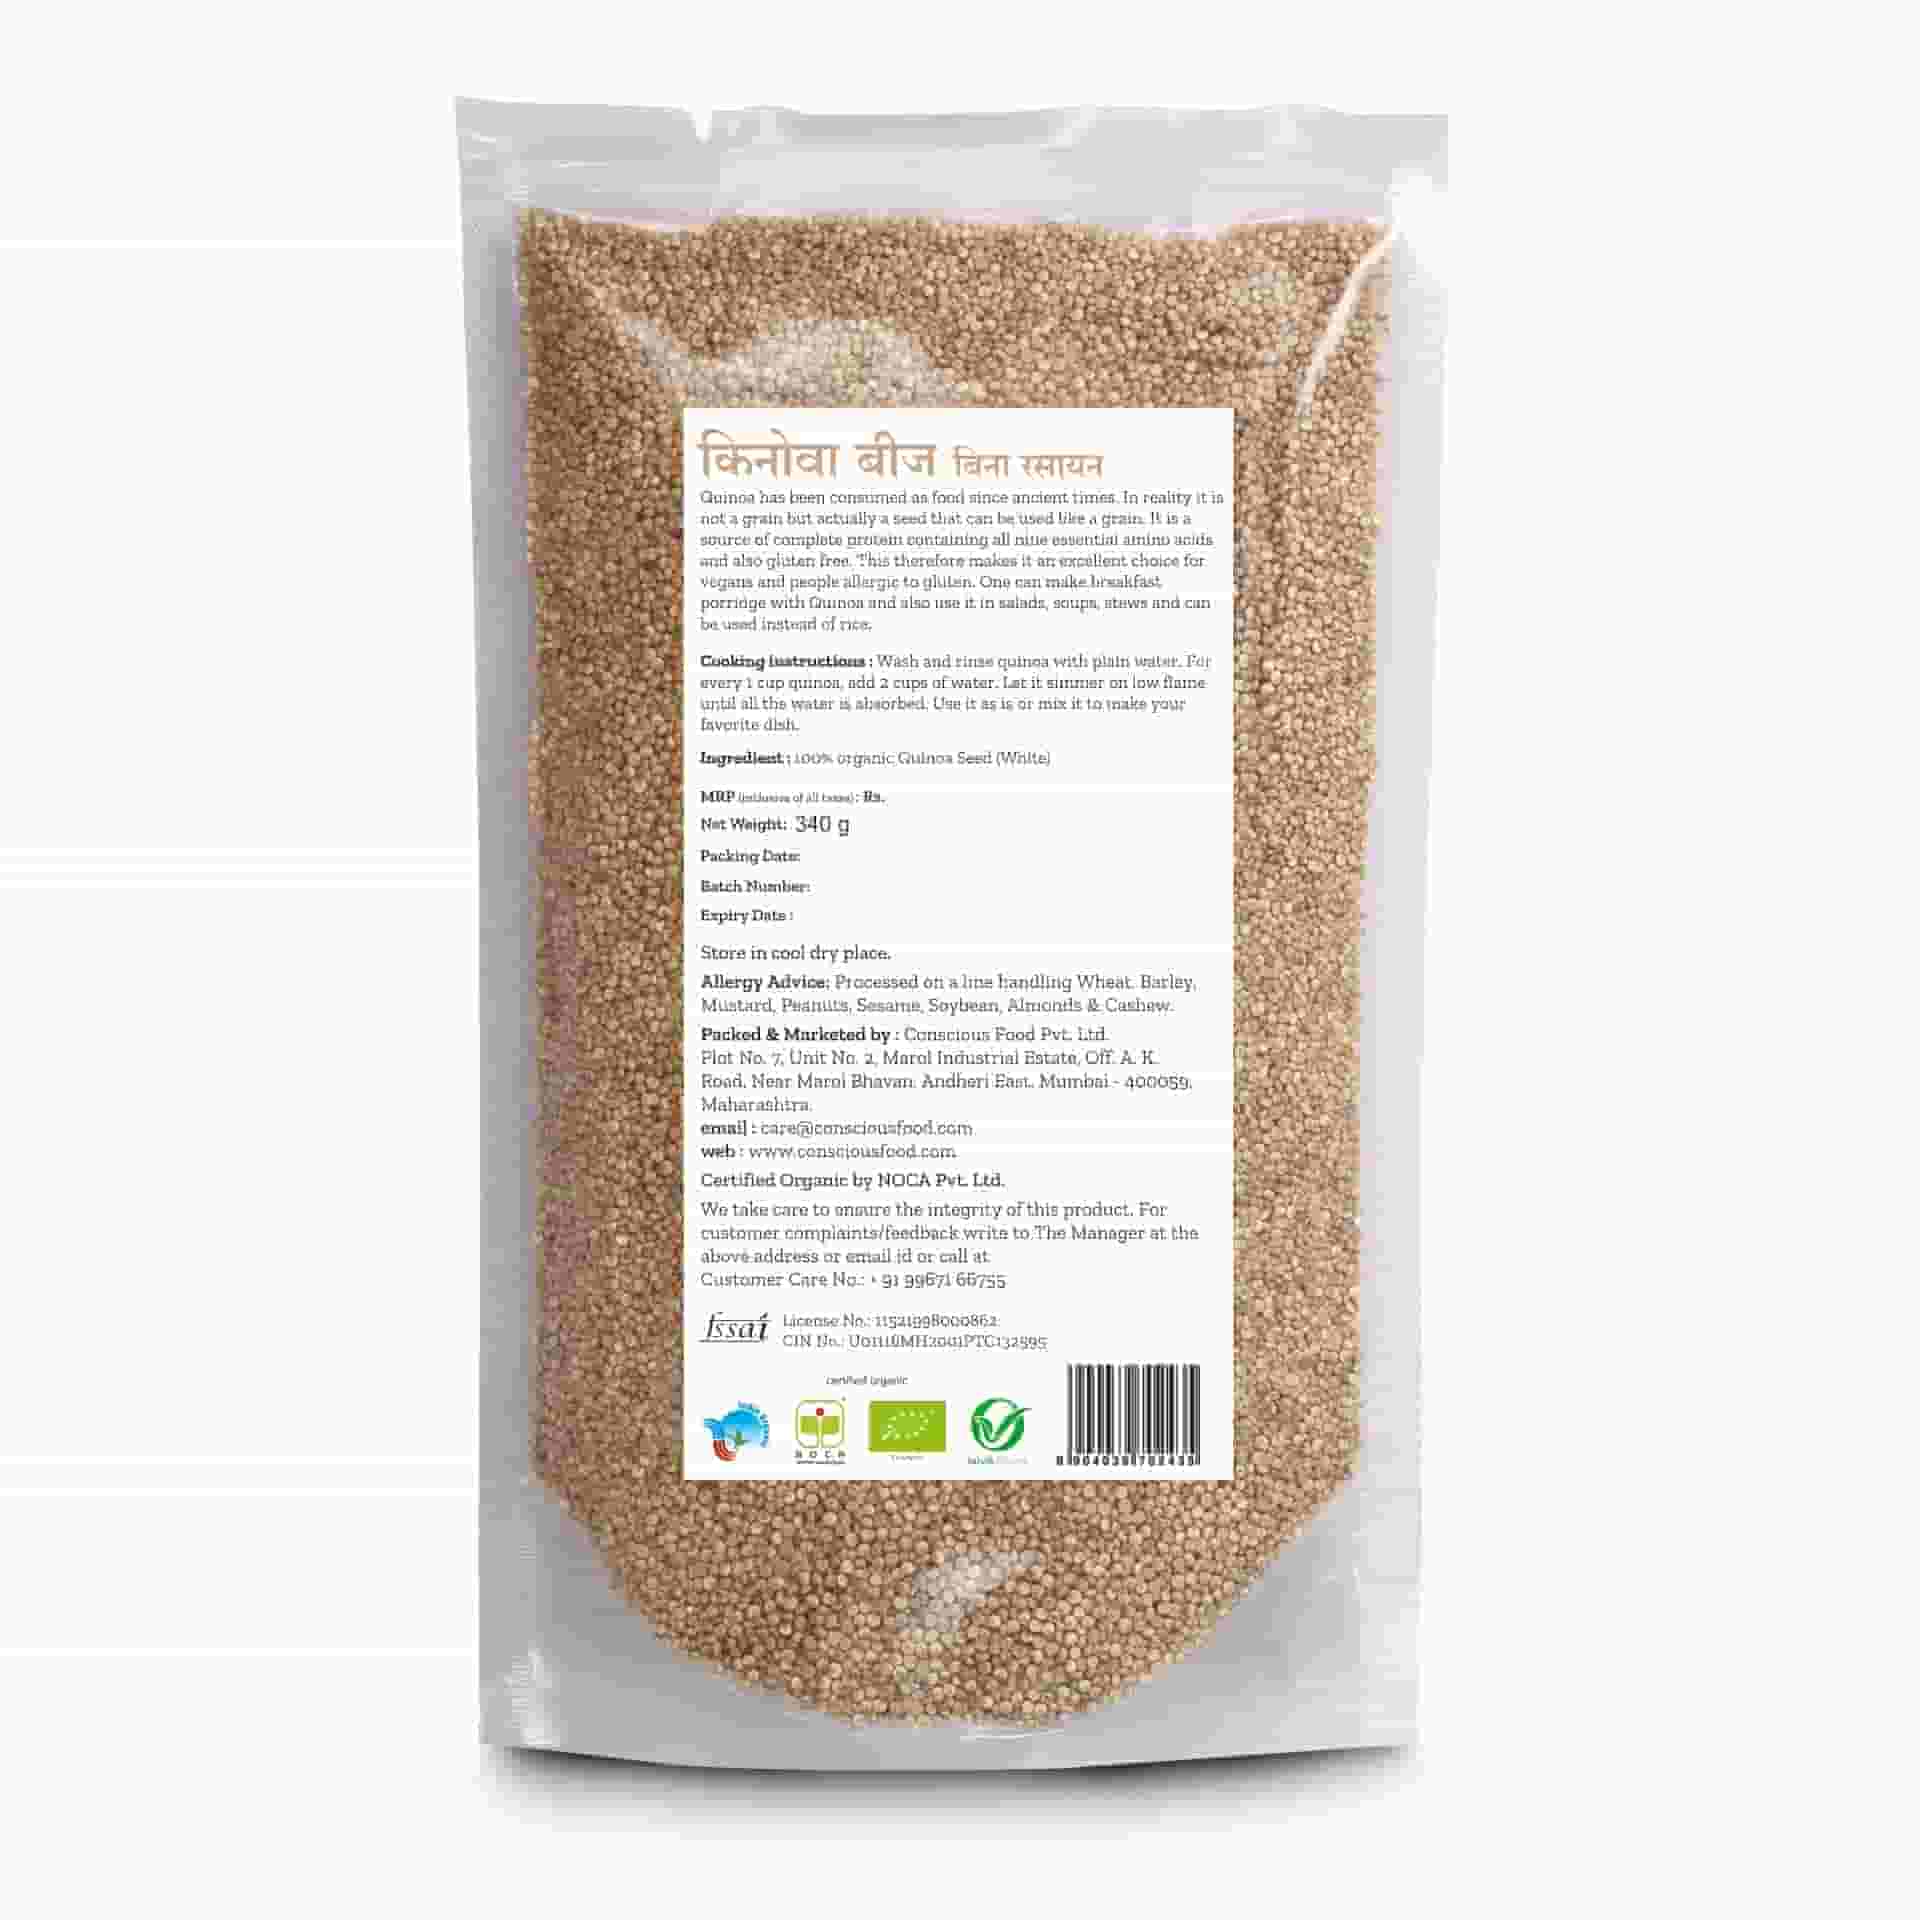 Conscious Food Quinoa Seed (White)